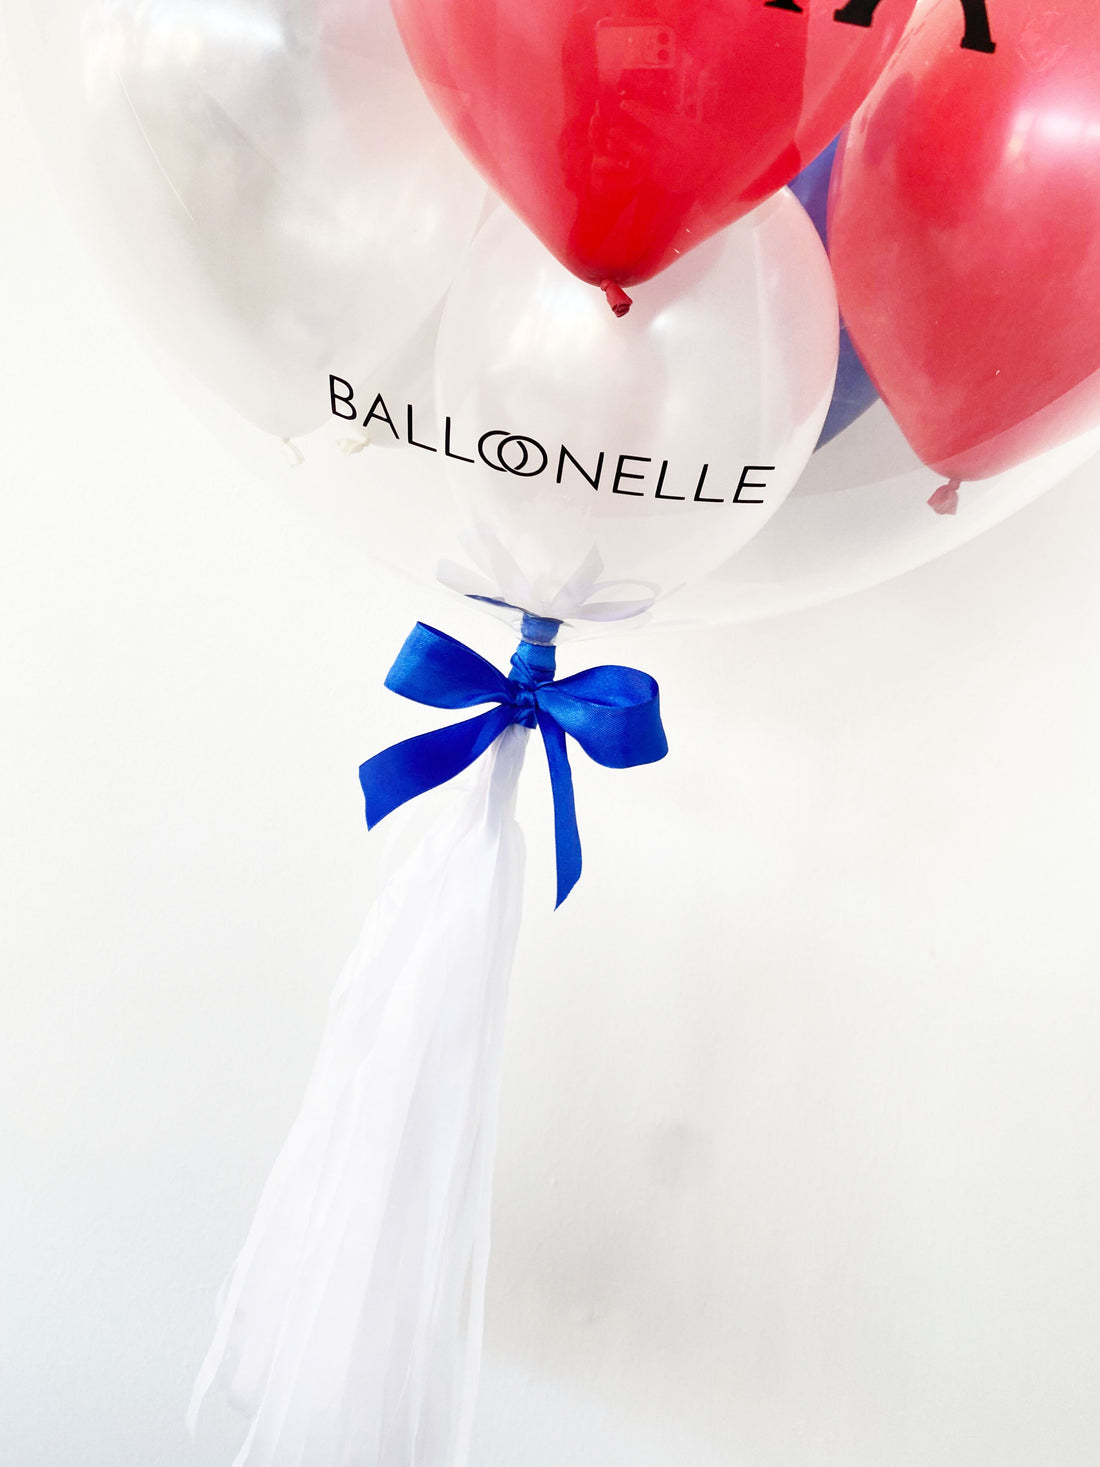 Paris Designer Ballon